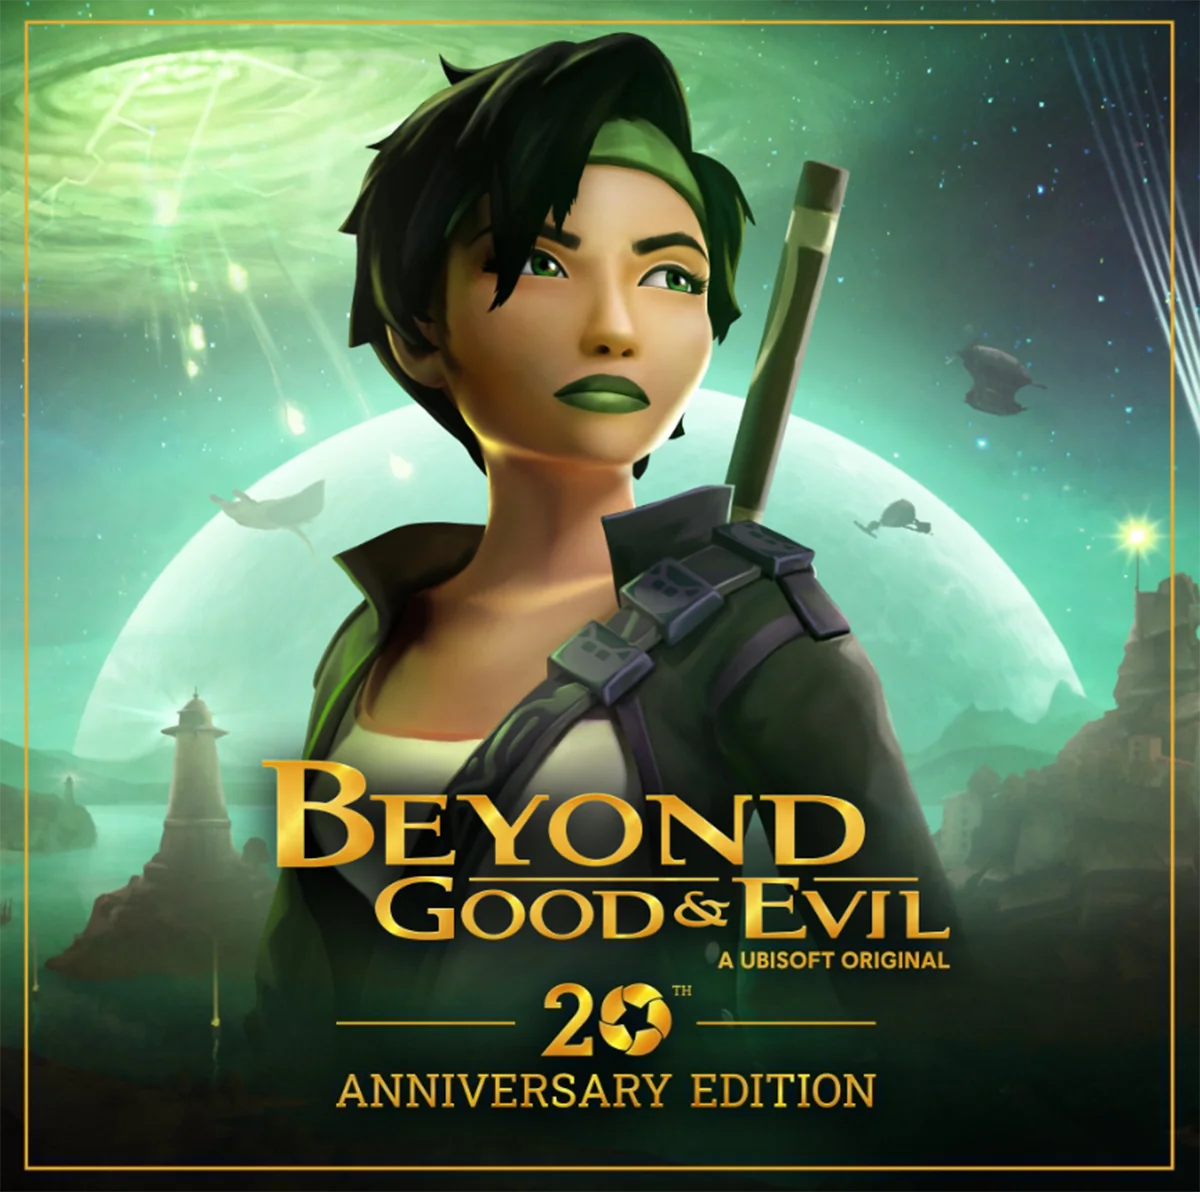 Ubisoft официально анонсировала юбилейное издание Beyond Good and Evil - фото 1